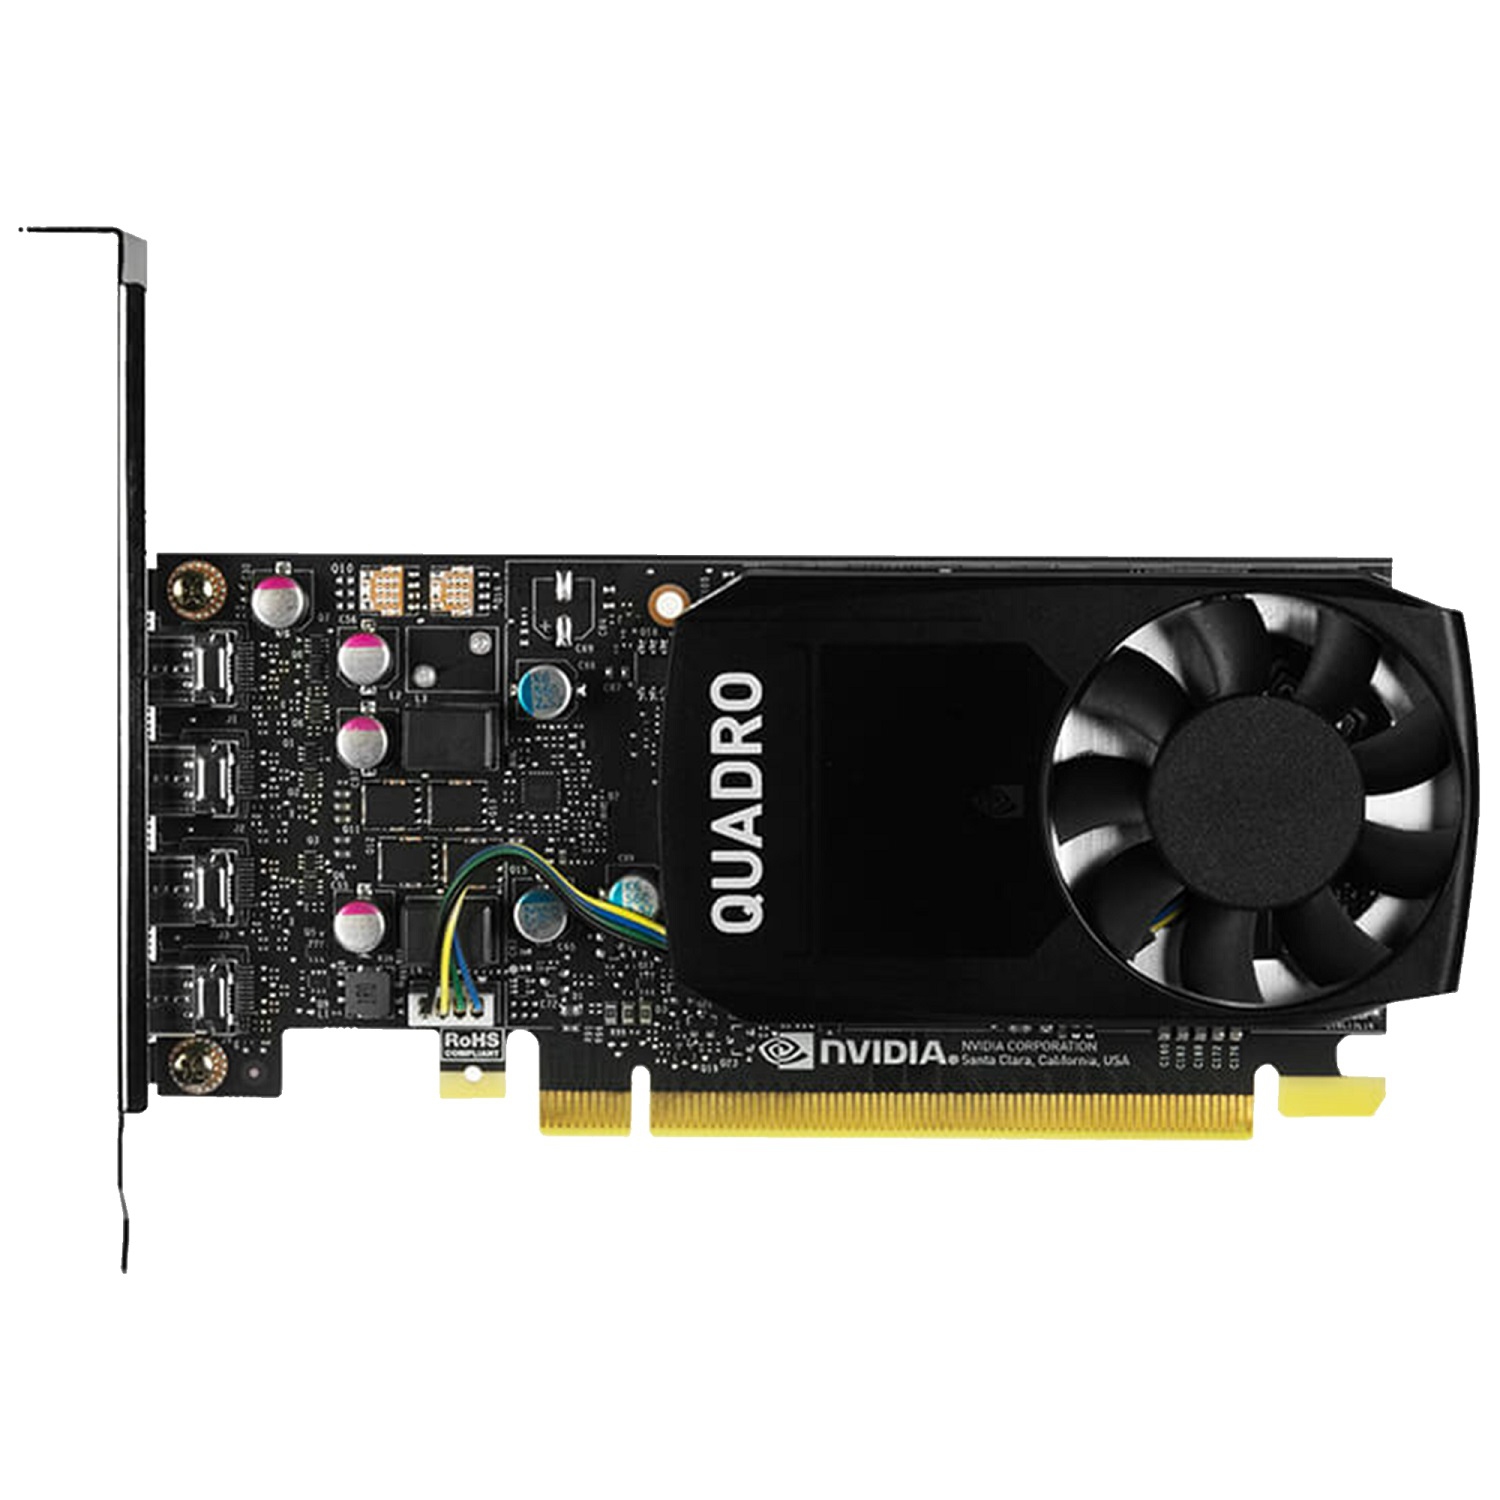 Refurbished (Good) - NVIDIA Quadro P600 Professional Video Card up to 64GB/s (2GB GDDR5 64-bit/ PCI Express 3.0 x16/ 4x Mini Display ports) High Profile Graphics Card